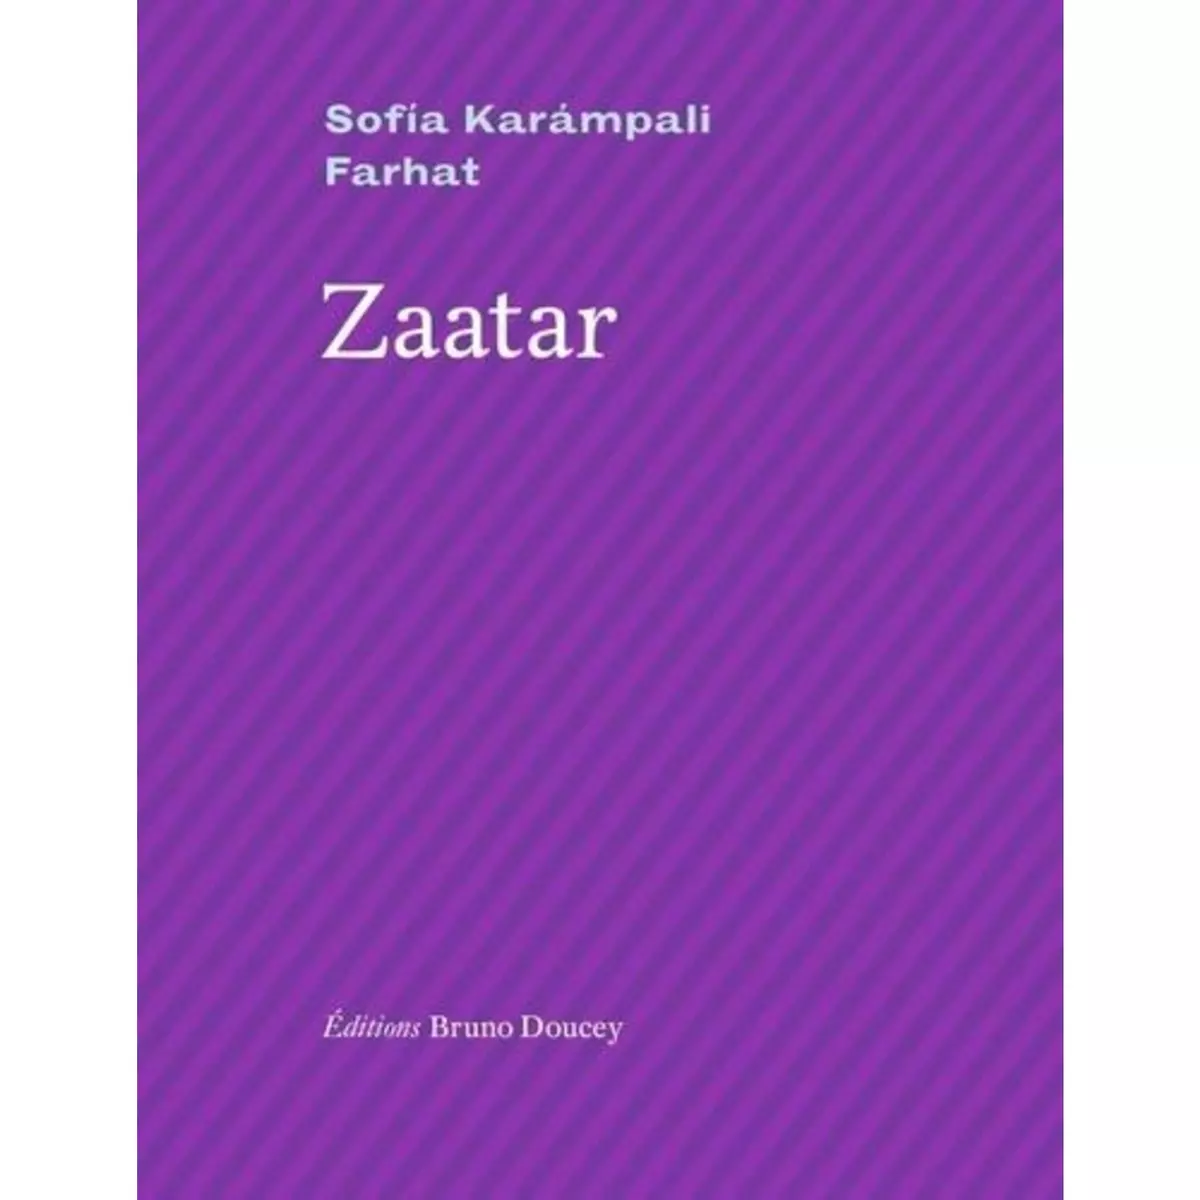  ZAATAR, Karampali Farhat Sofia